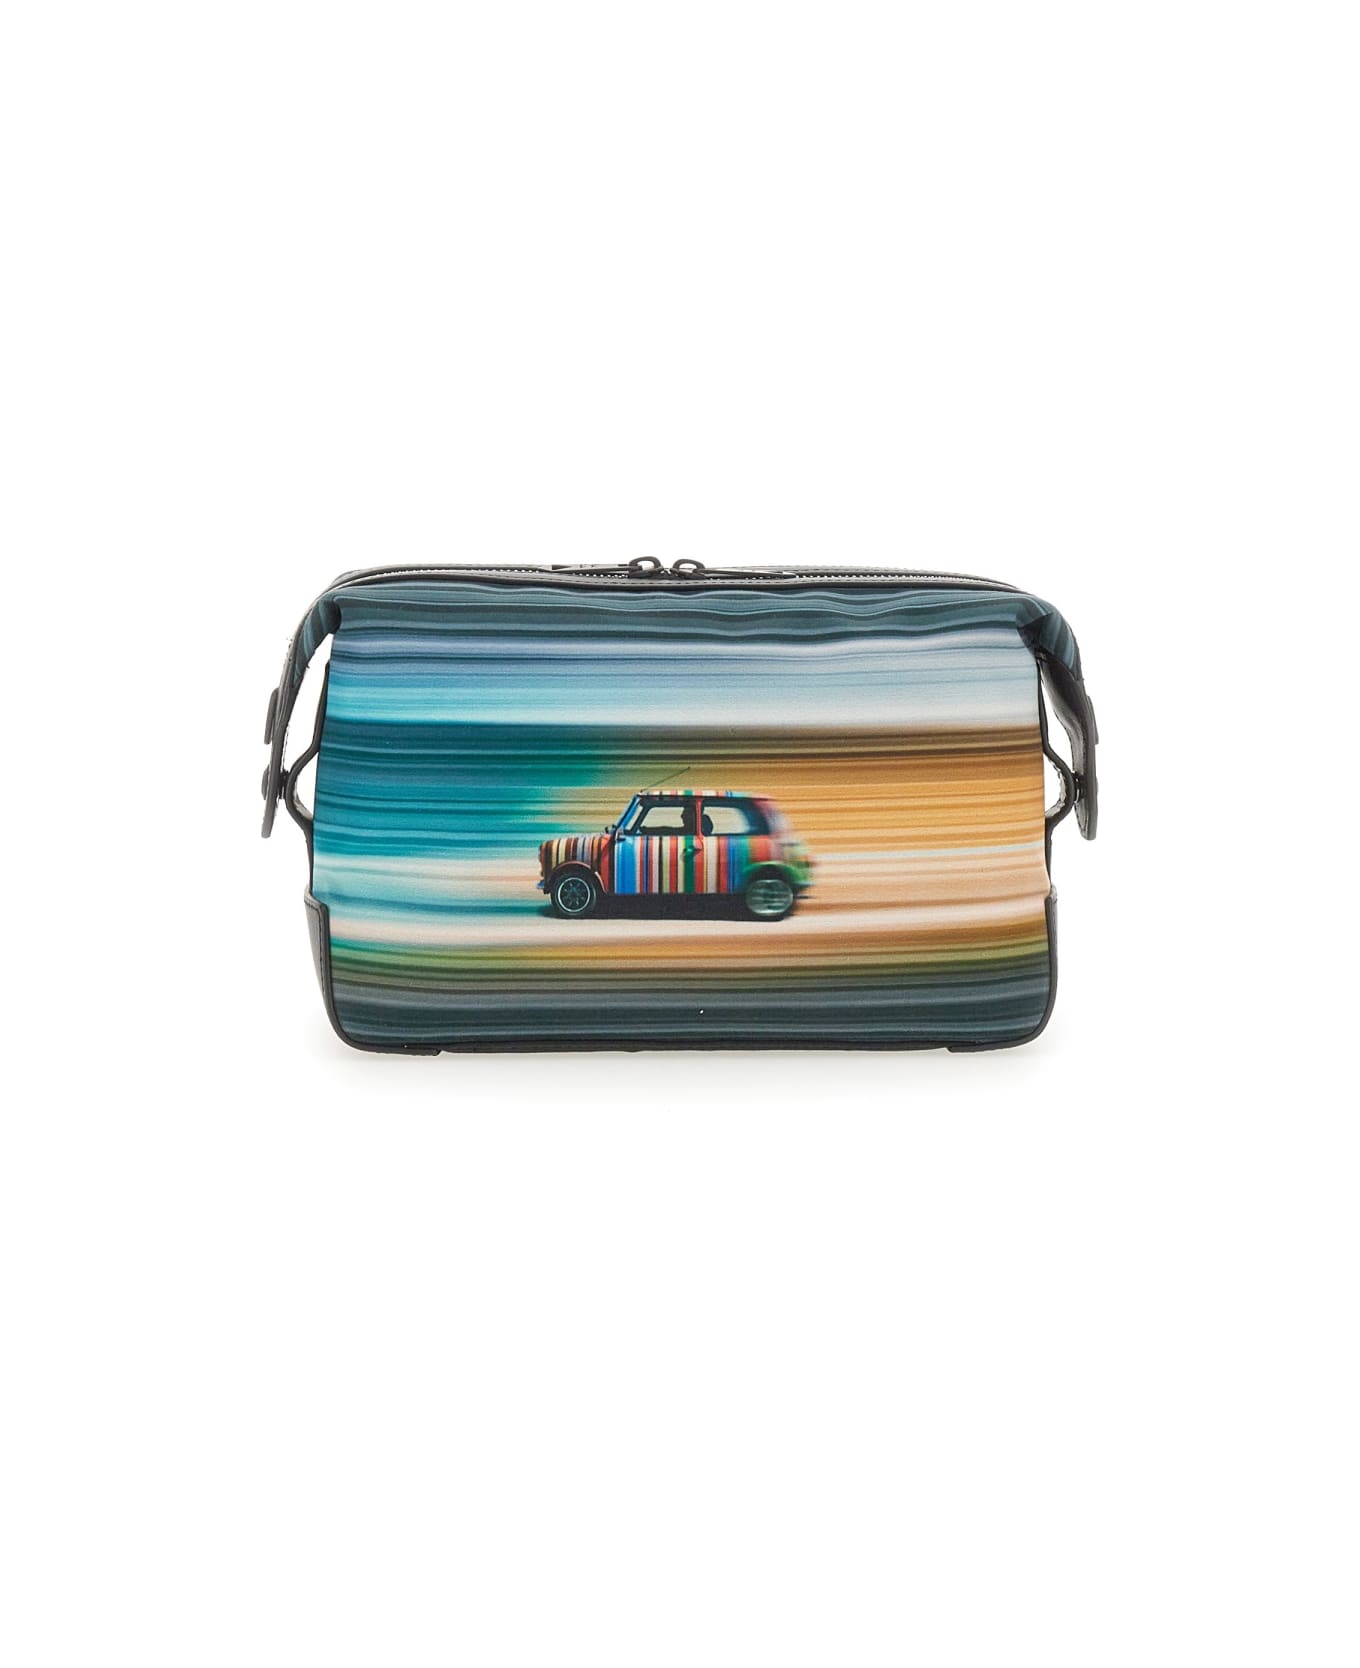 Paul Smith "mini Blur" Travel Clutch Bag - MULTICOLOUR